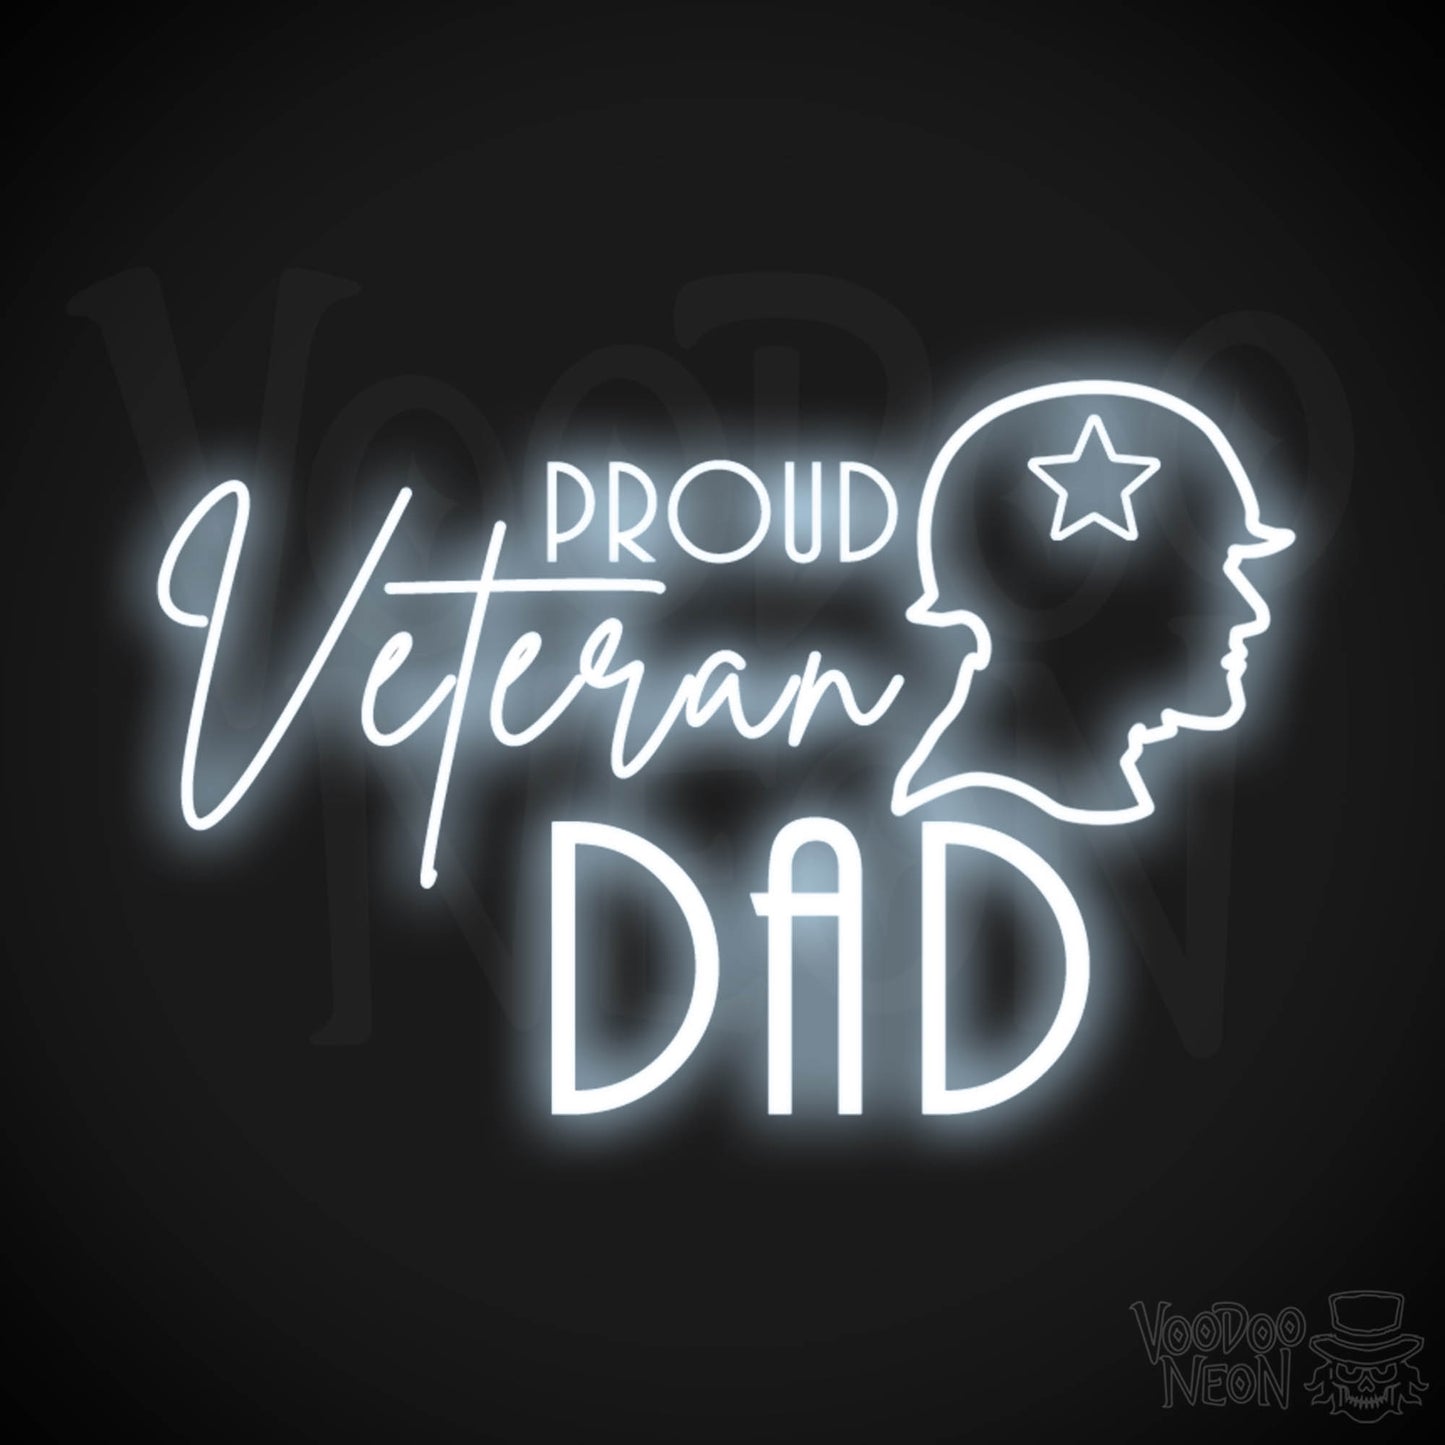 Proud Veteran Dad Neon Sign - Proud Veteran Dad Sign - Neon Veteran Wall Art - Color Cool White